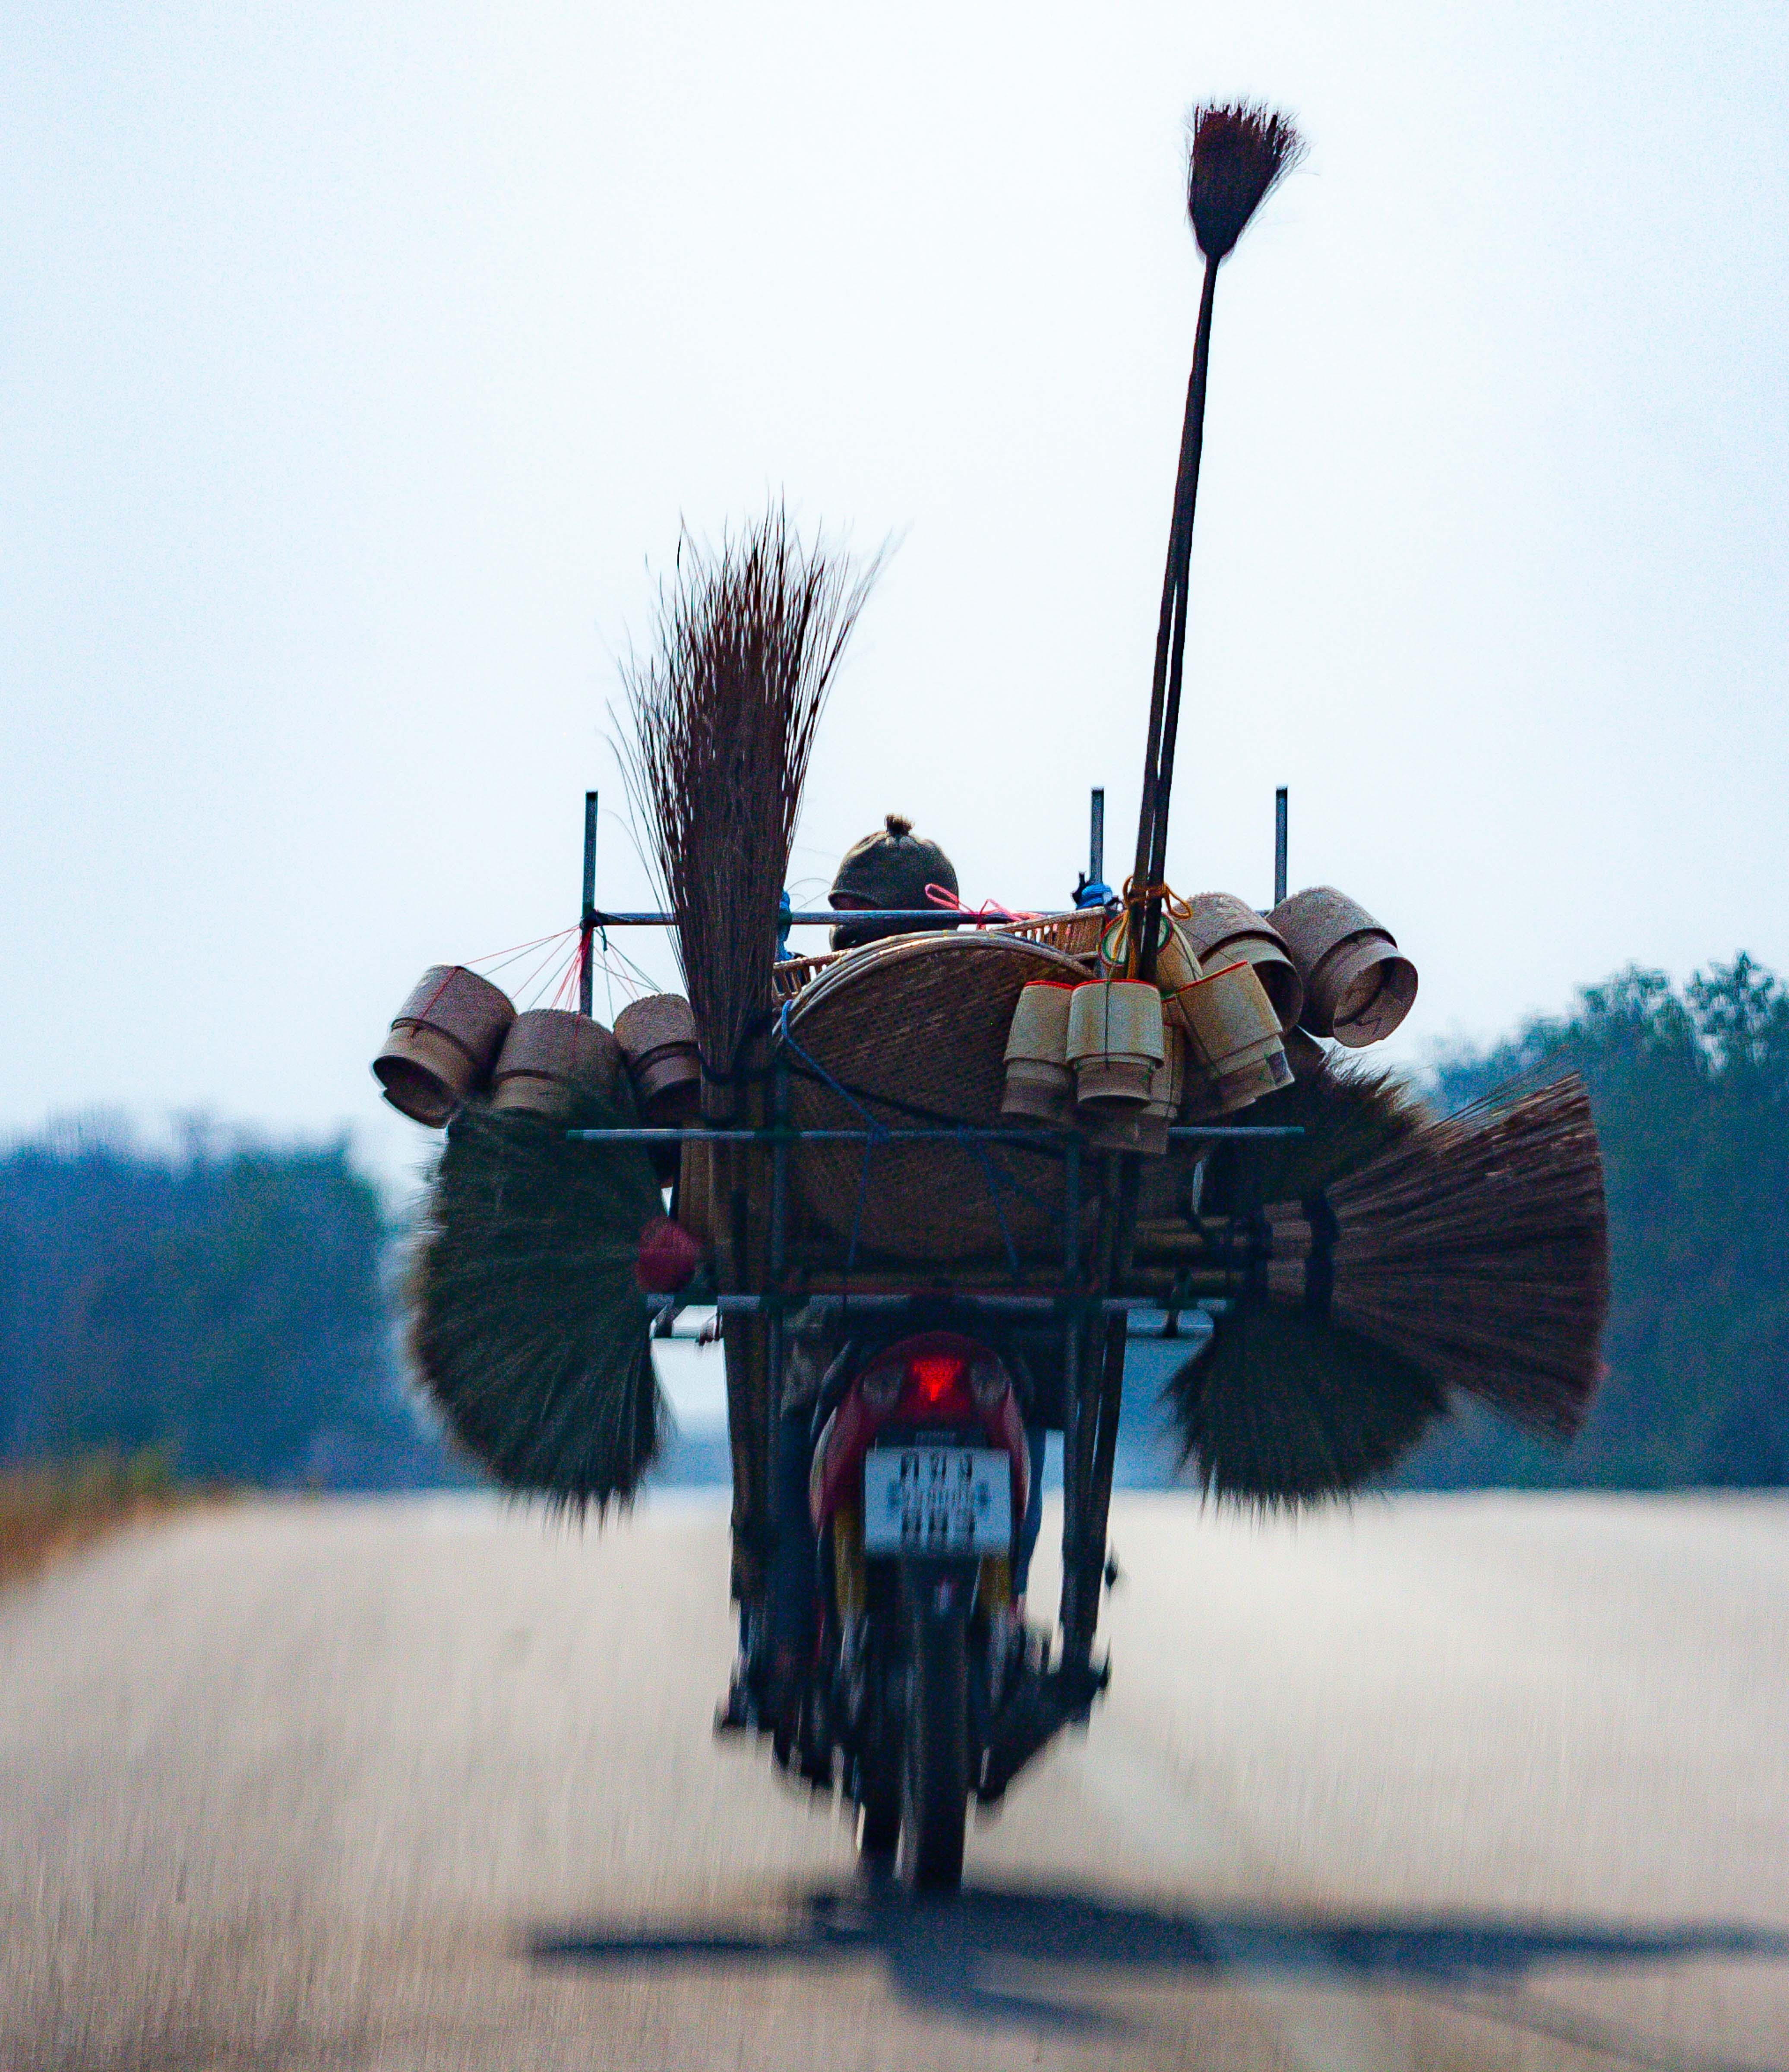 Thailand, Maha Sarakham Prov, Broom Salesbike, 2008, IMG 0721